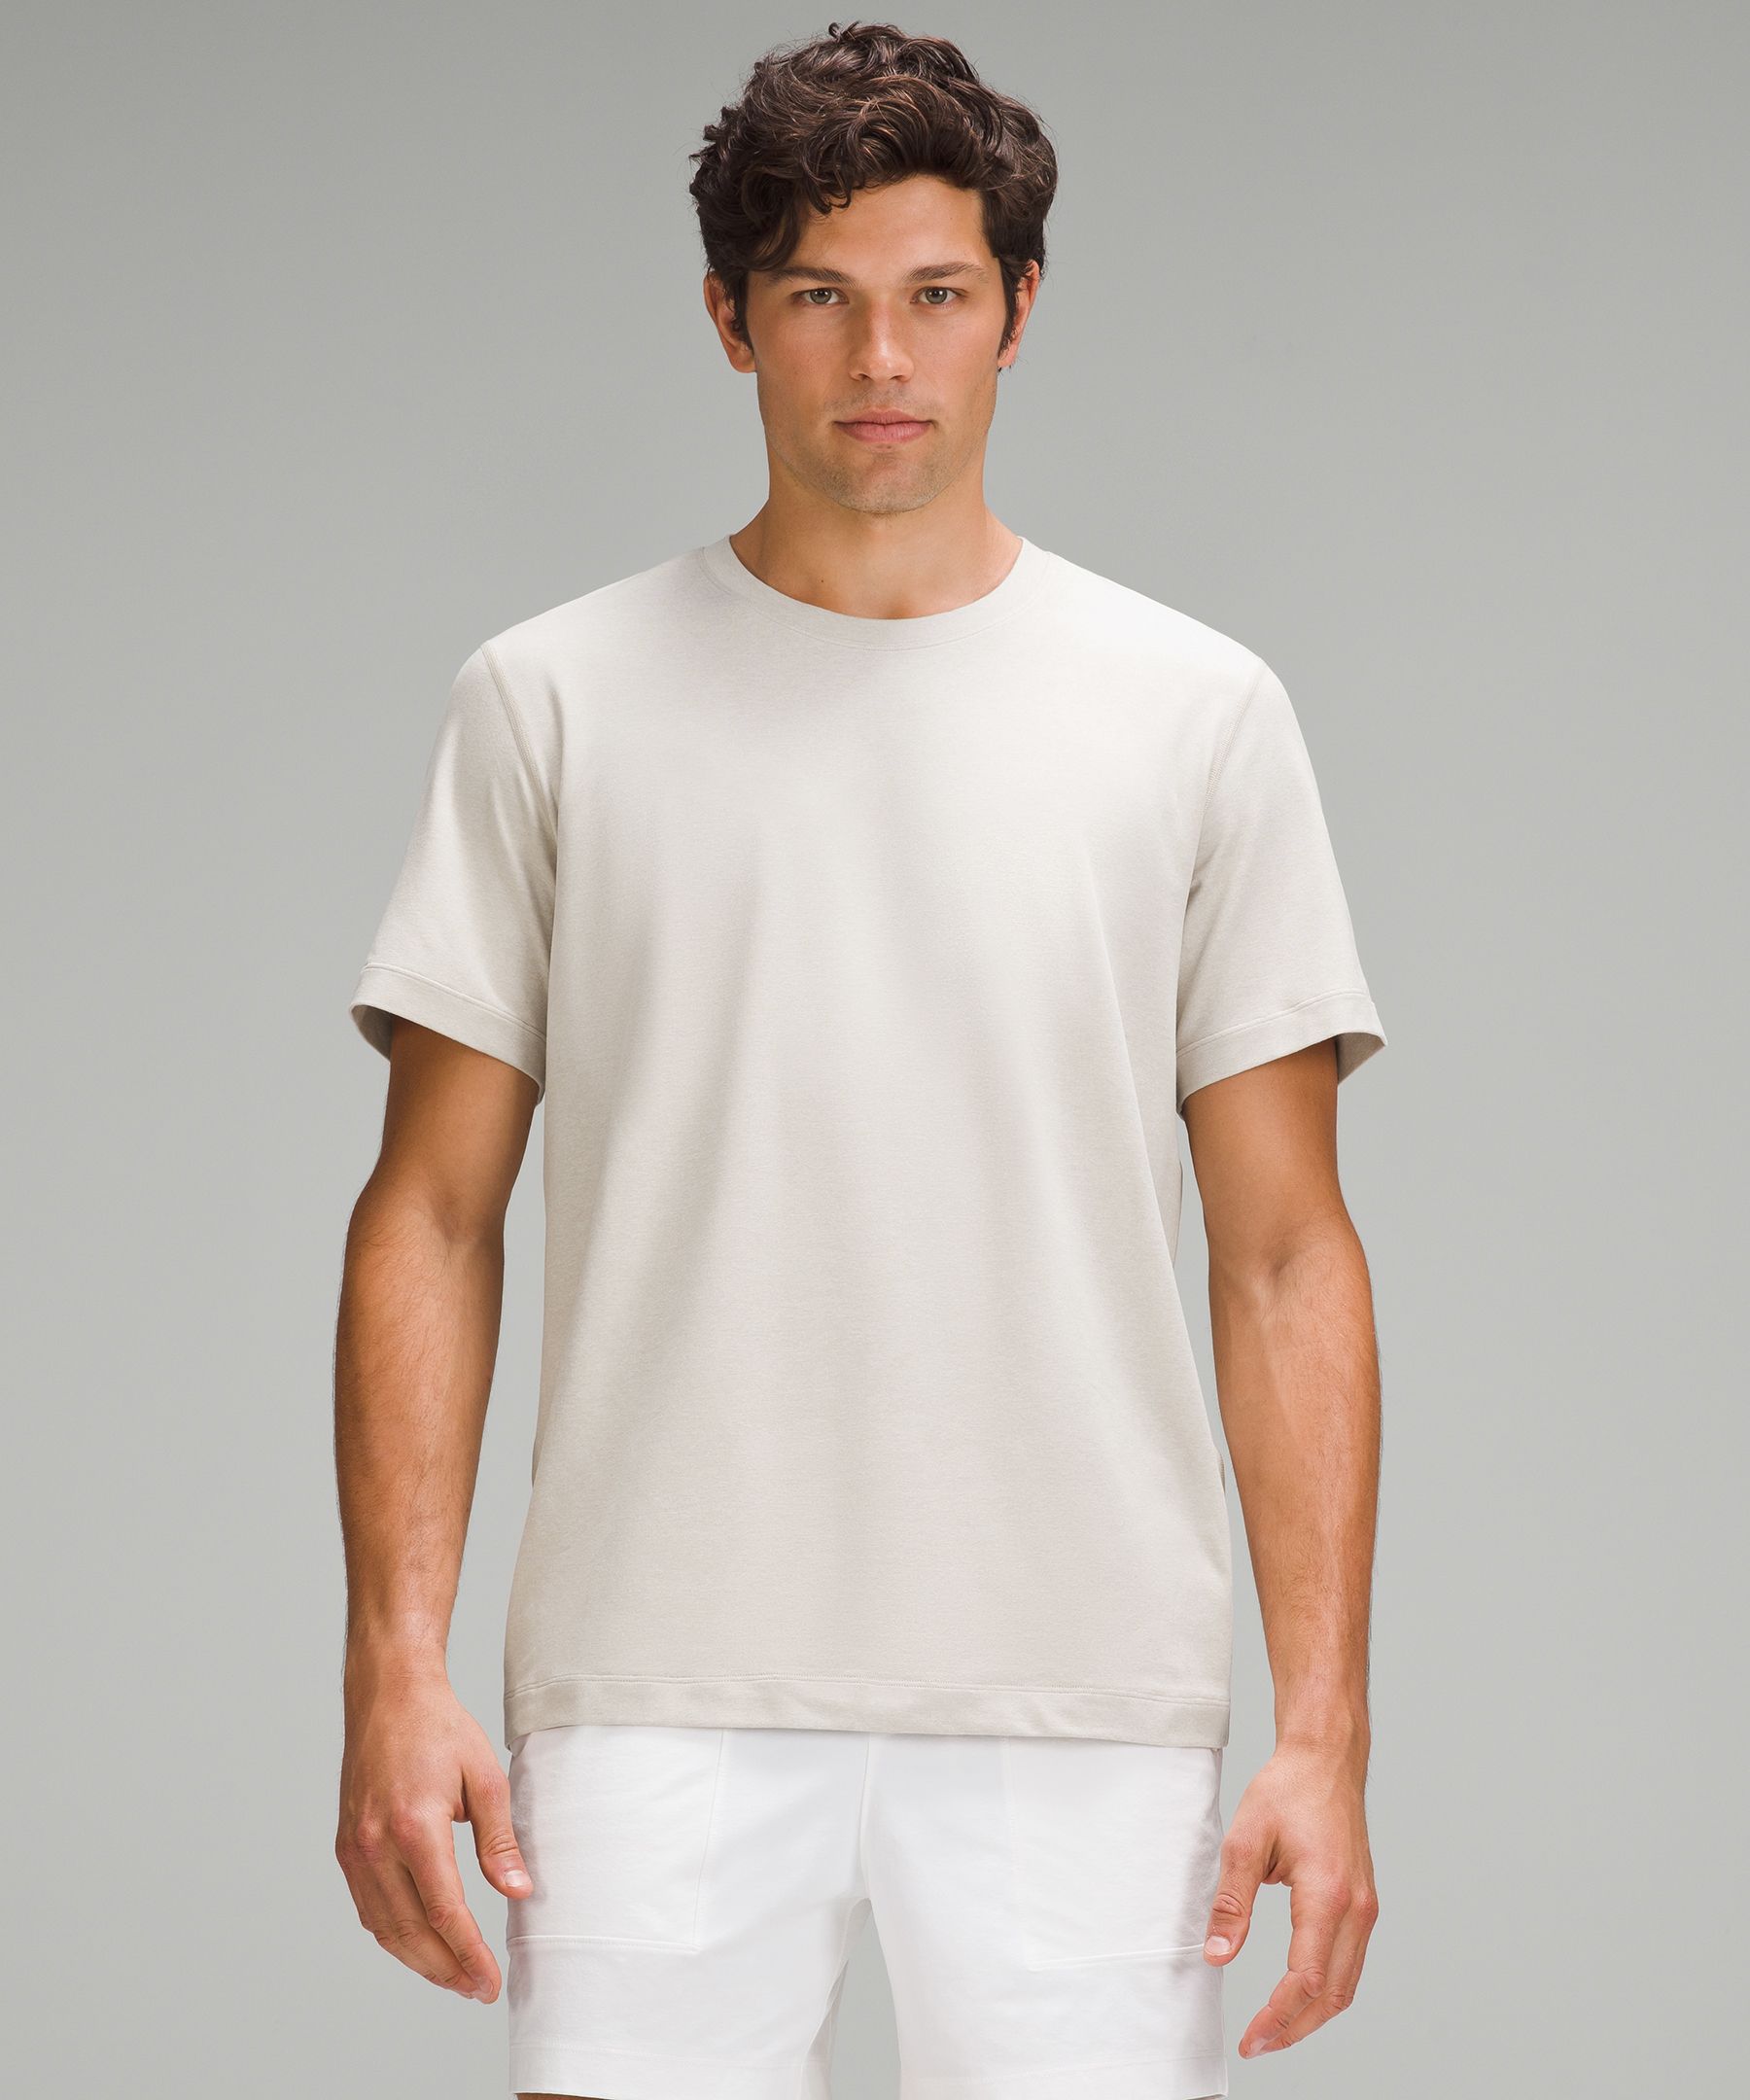 Best 25+ Deals for White Lululemon Athletica T Shirt